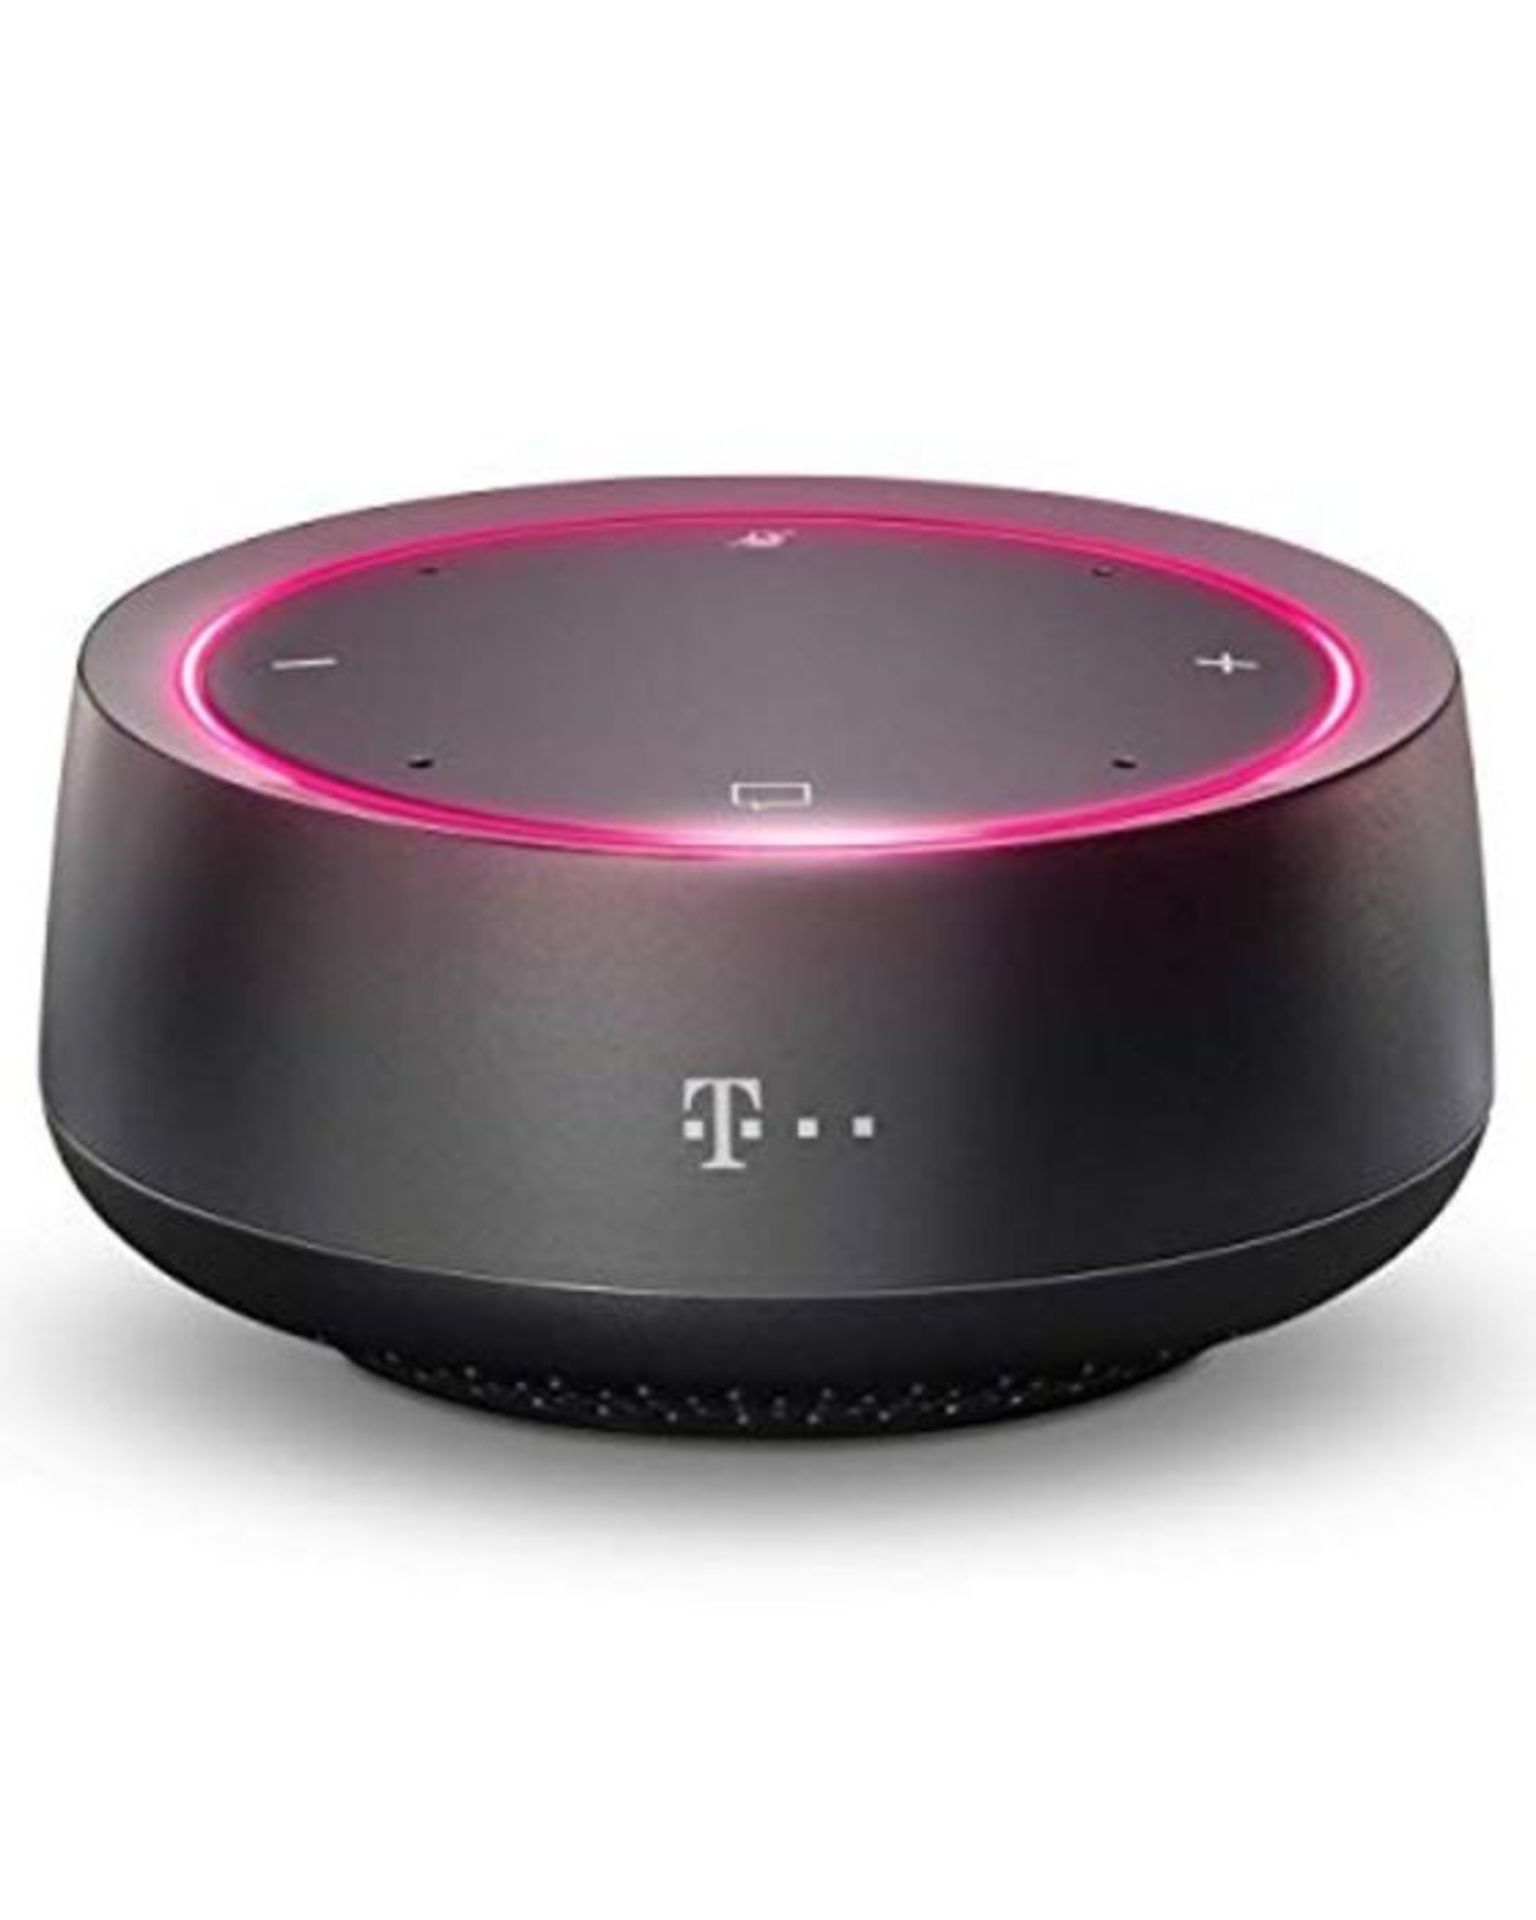 Smart Speaker Mini der Telekom | smarte Sprachsteuerung per WLAN Ã¼ber Lautsprecher